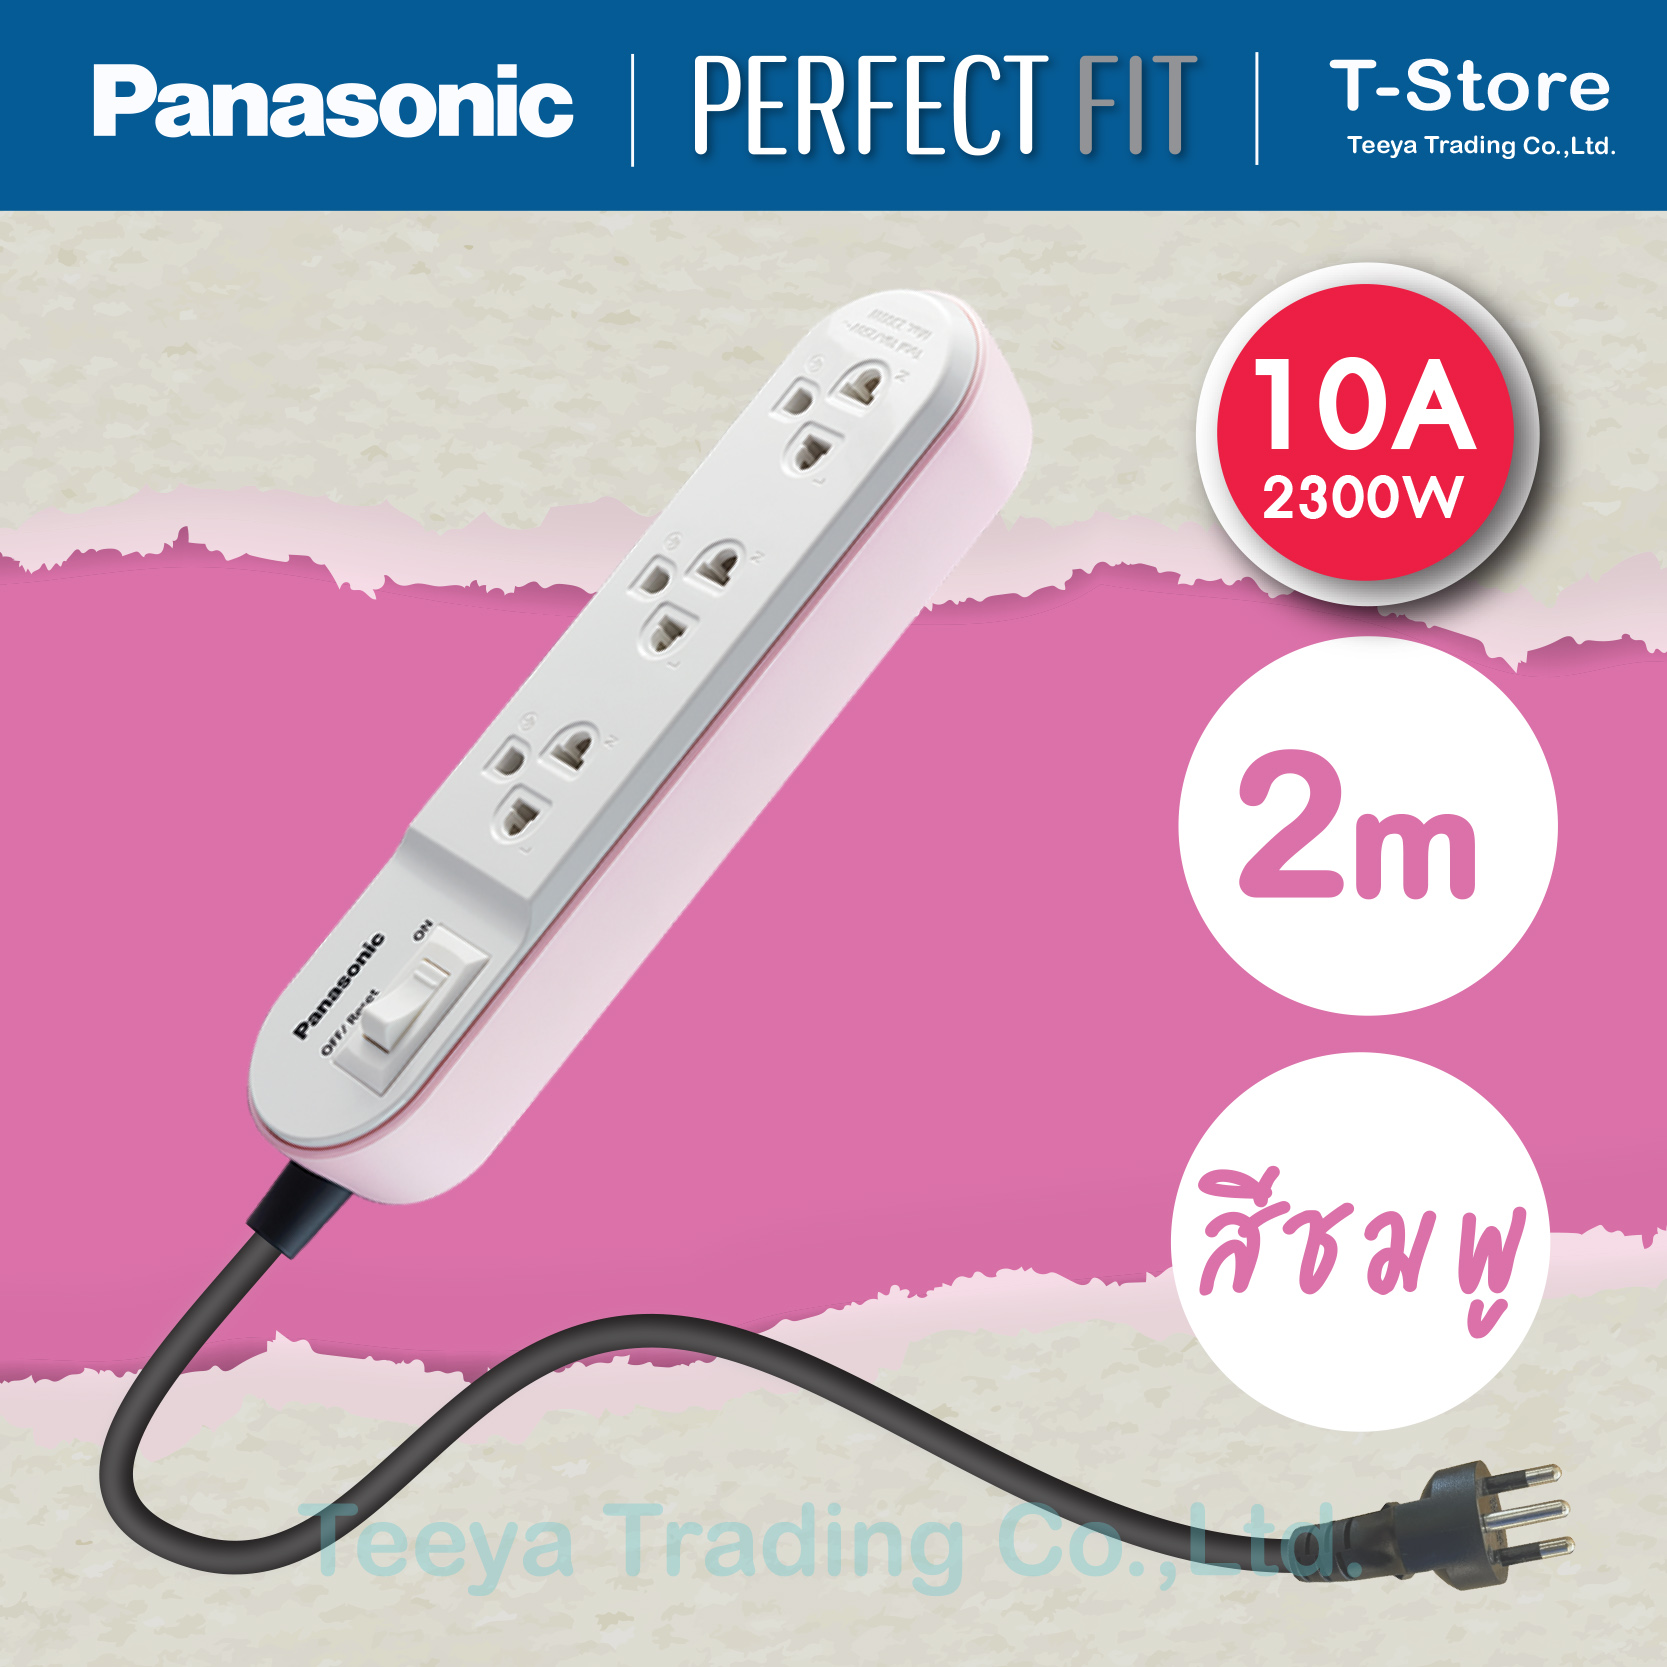 Panasonic Perfect FIT  รุ่น WCHG 24232 ปลั๊กพ่วง 3 เต้ารับ 1 สวิตช์คุมเมน 10A 2300W   สายยาว 2 M